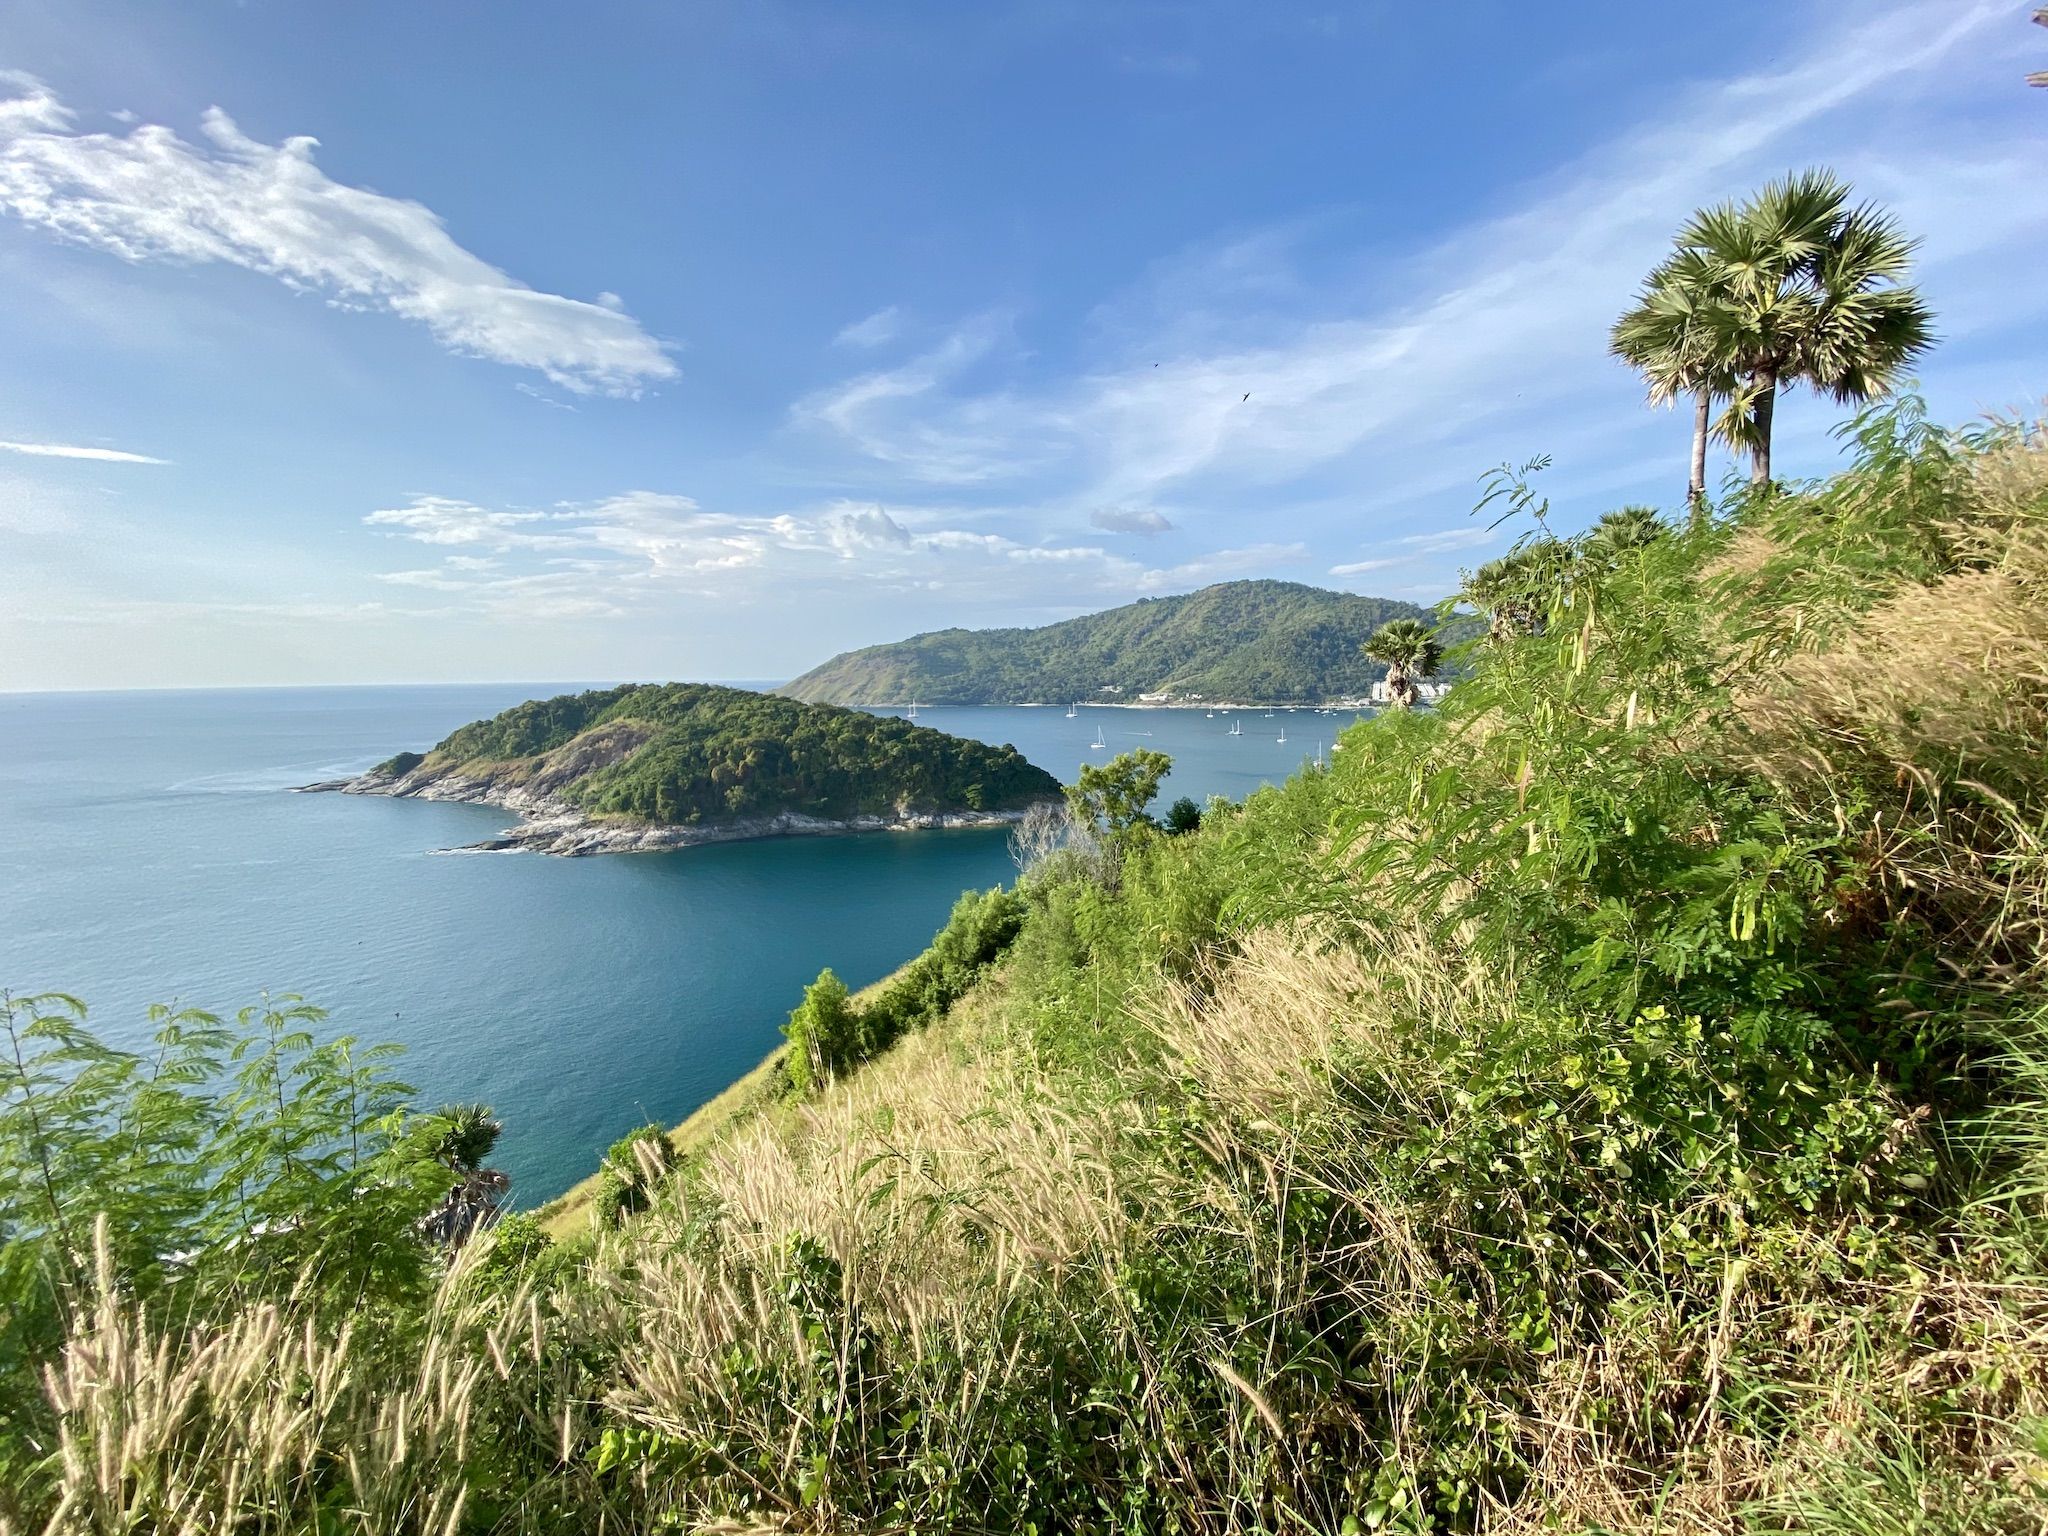 View from Promthep Cape to the upstream, uninhabited island of Koh Man. Photo: Sascha Tegtmeyer